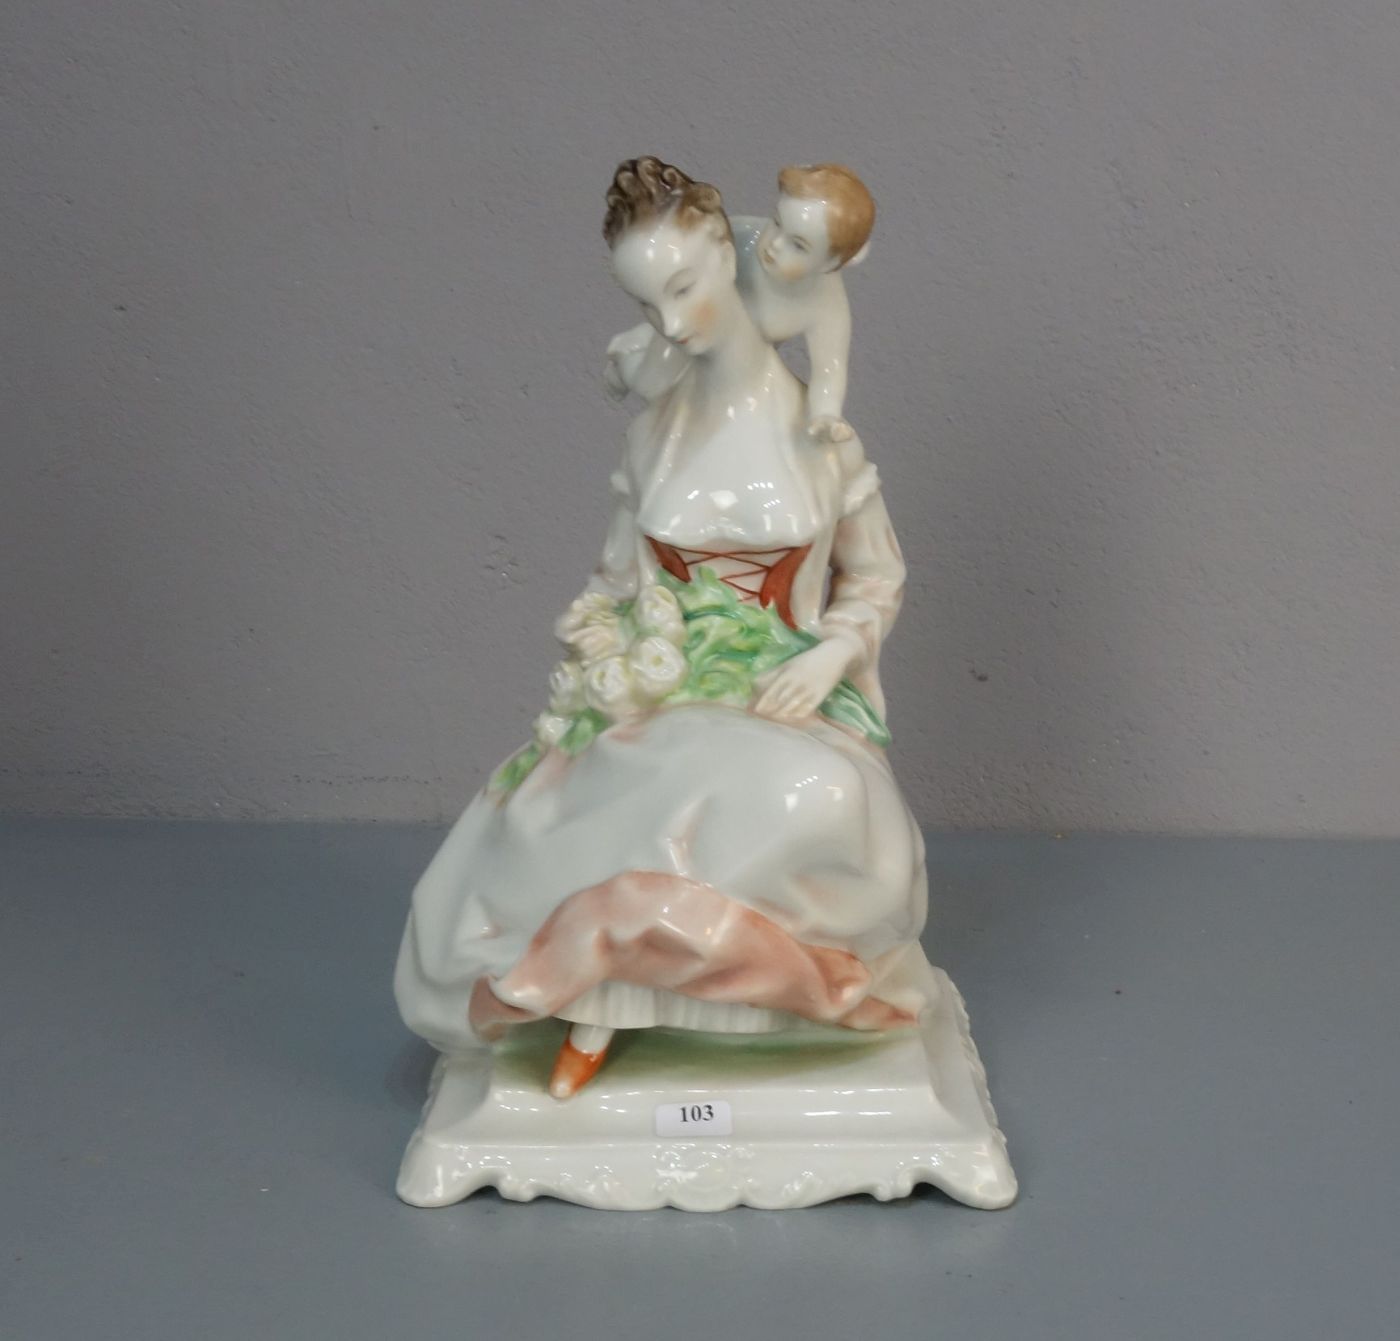 FIGURENGRUPPE "Frau mit Blumenstrauß und Amorette" / porcelain figure: "Woman with flowers and